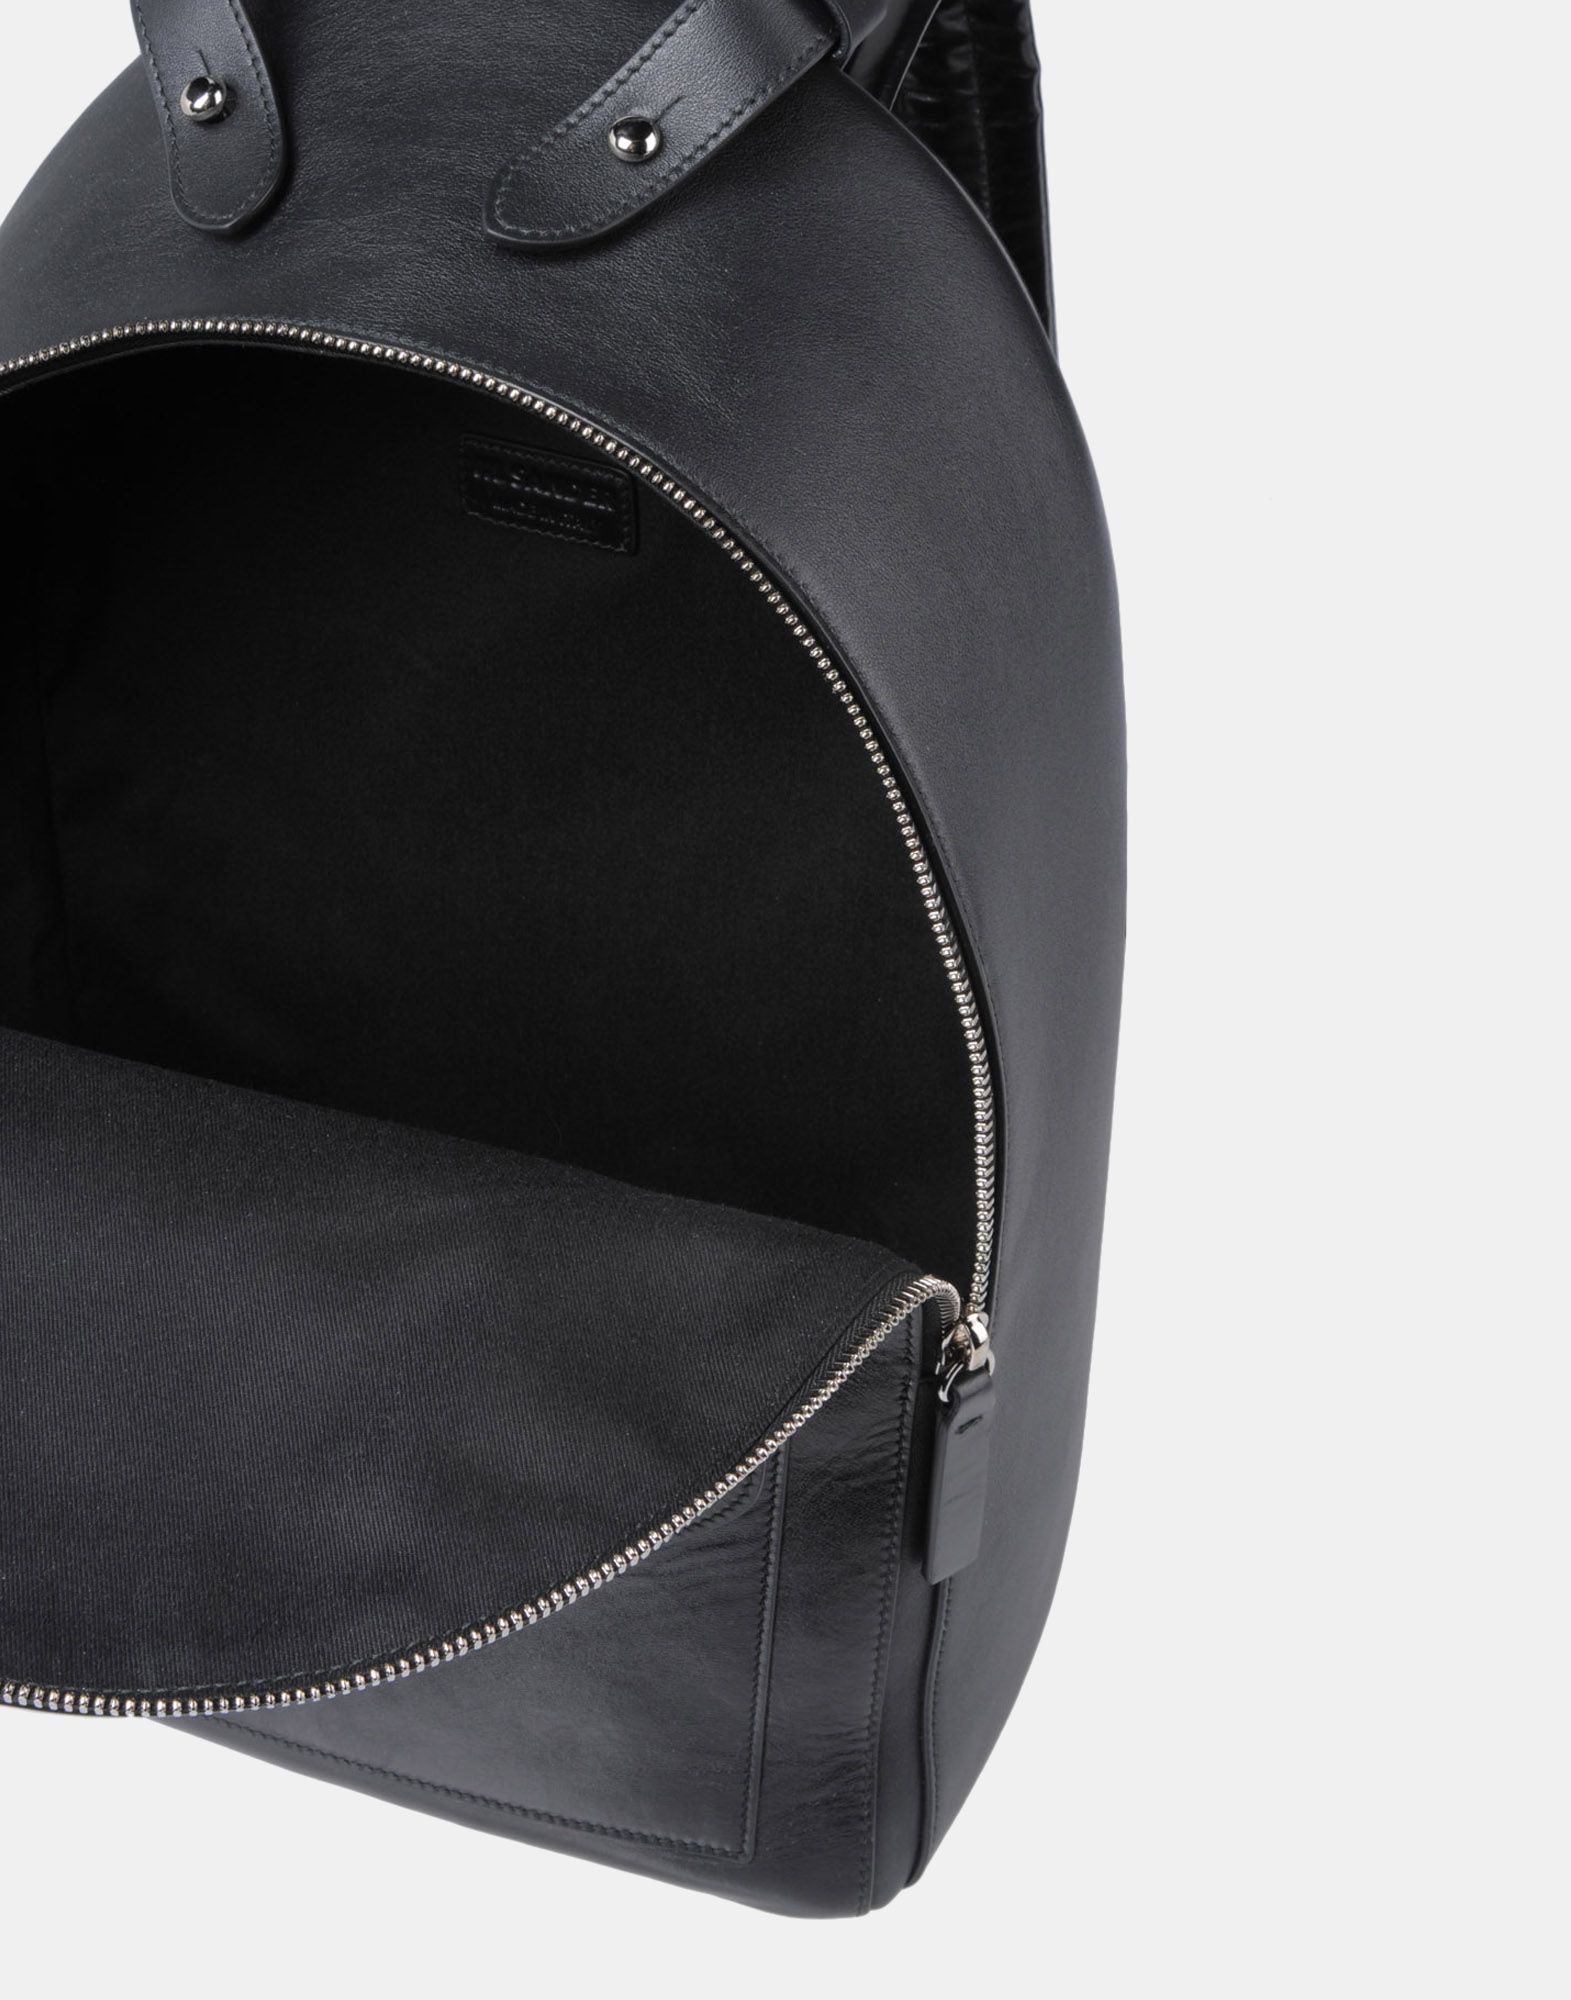 Backpack Men - Bags Men on Jil Sander Online Store